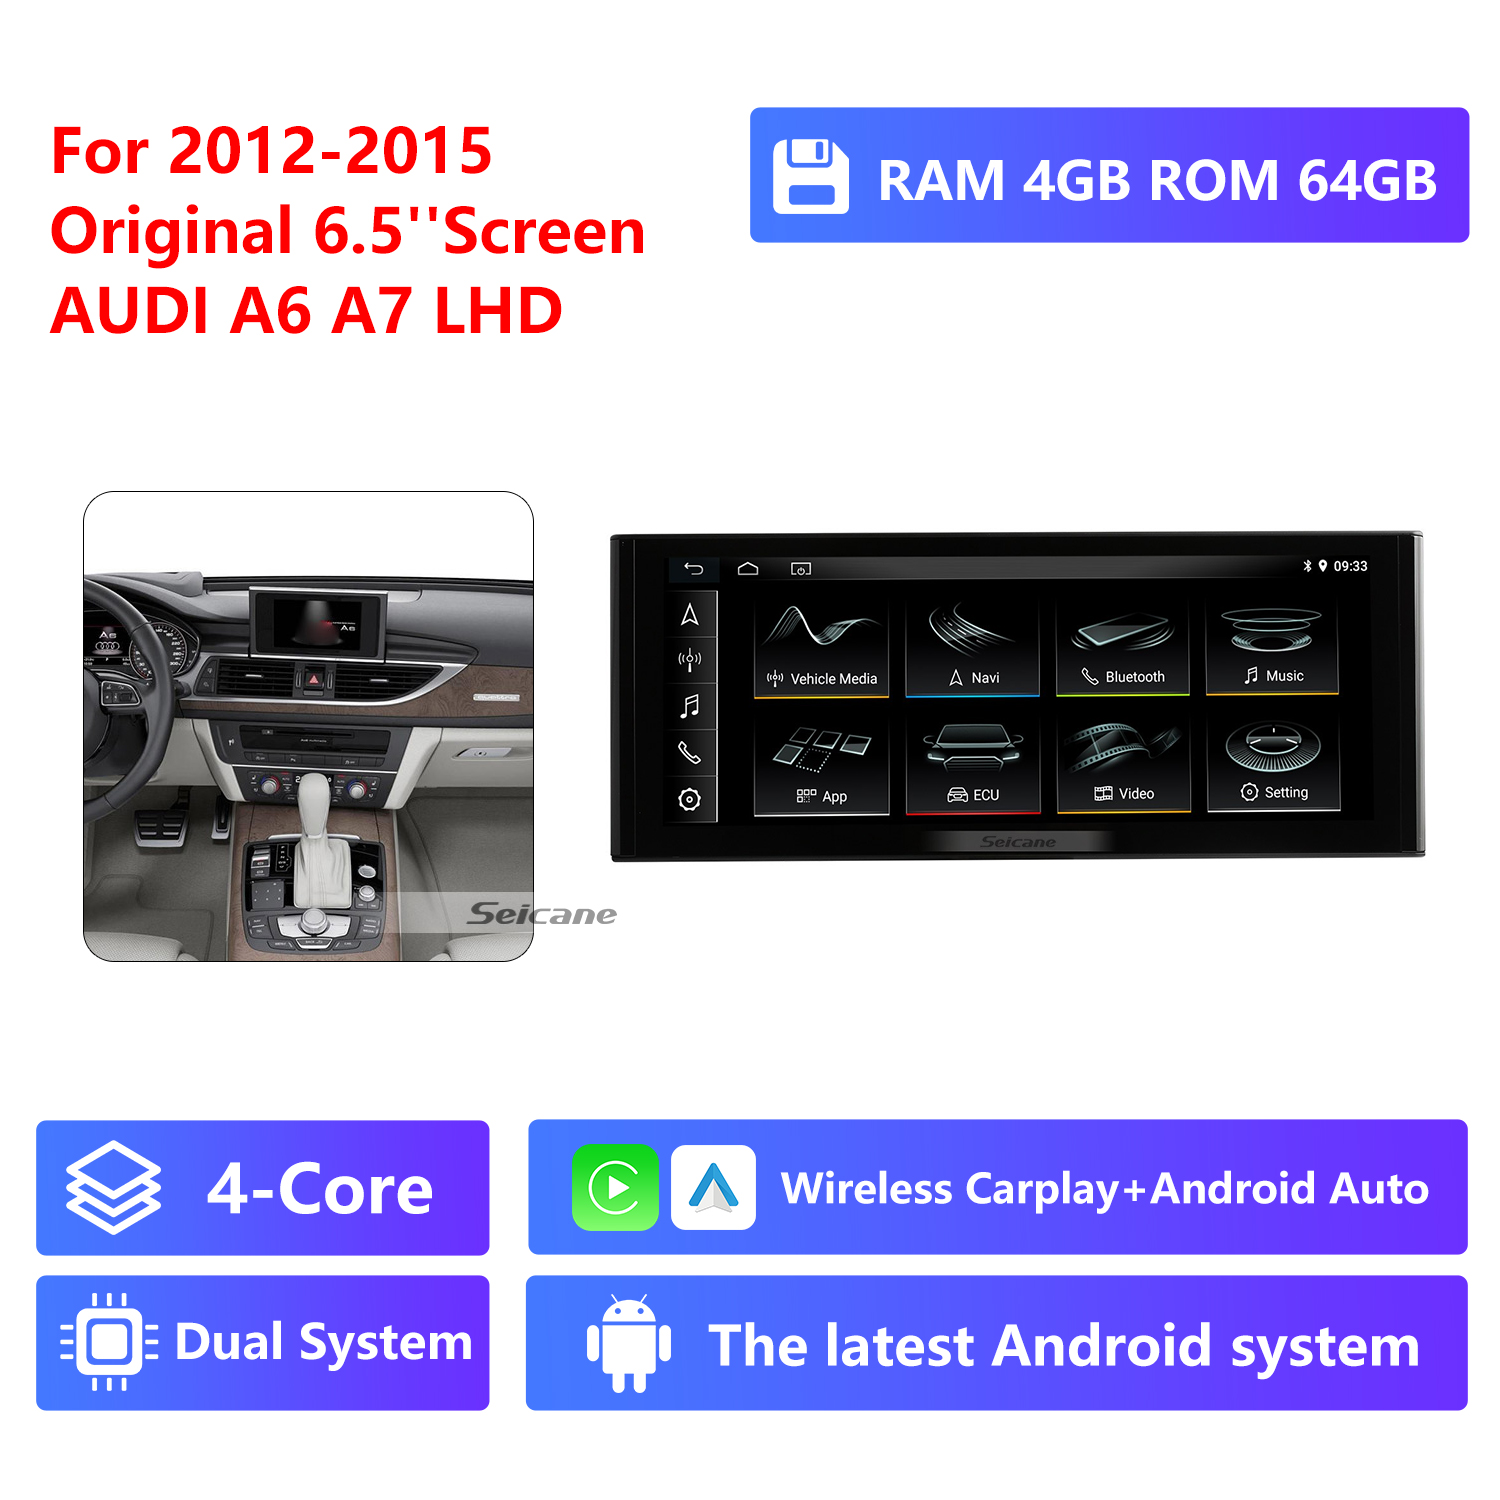 4-Core RAM 4G ROM 64G,2012-2015, Original 6.5"Screen,LHD